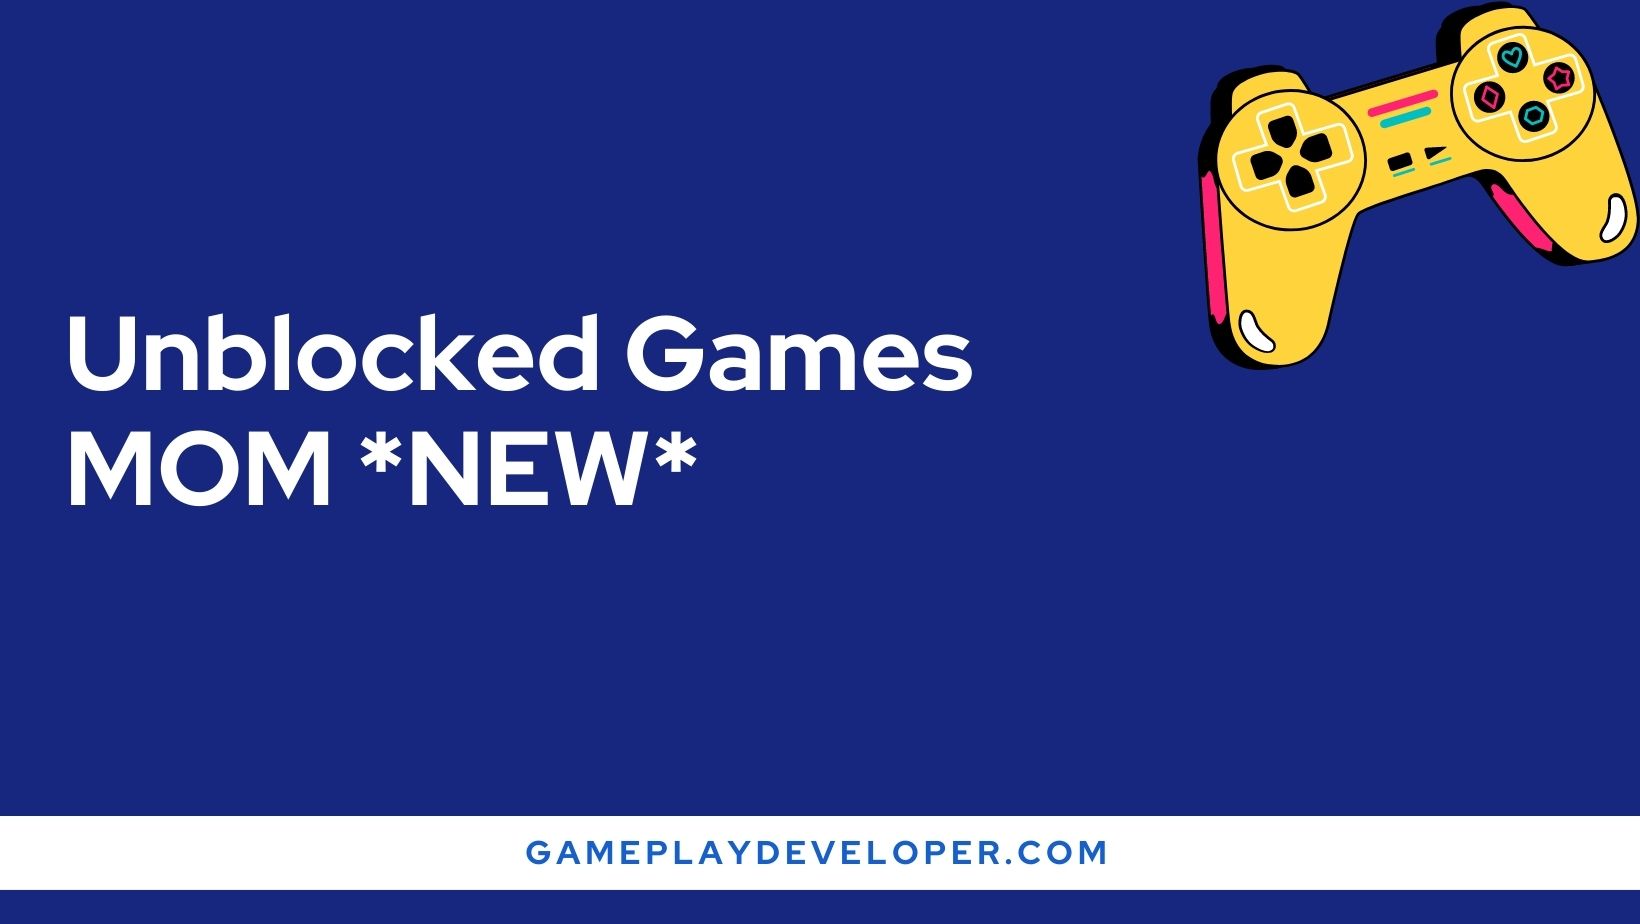 Unblocked Games MOM *NEW* - Gameplay Developer